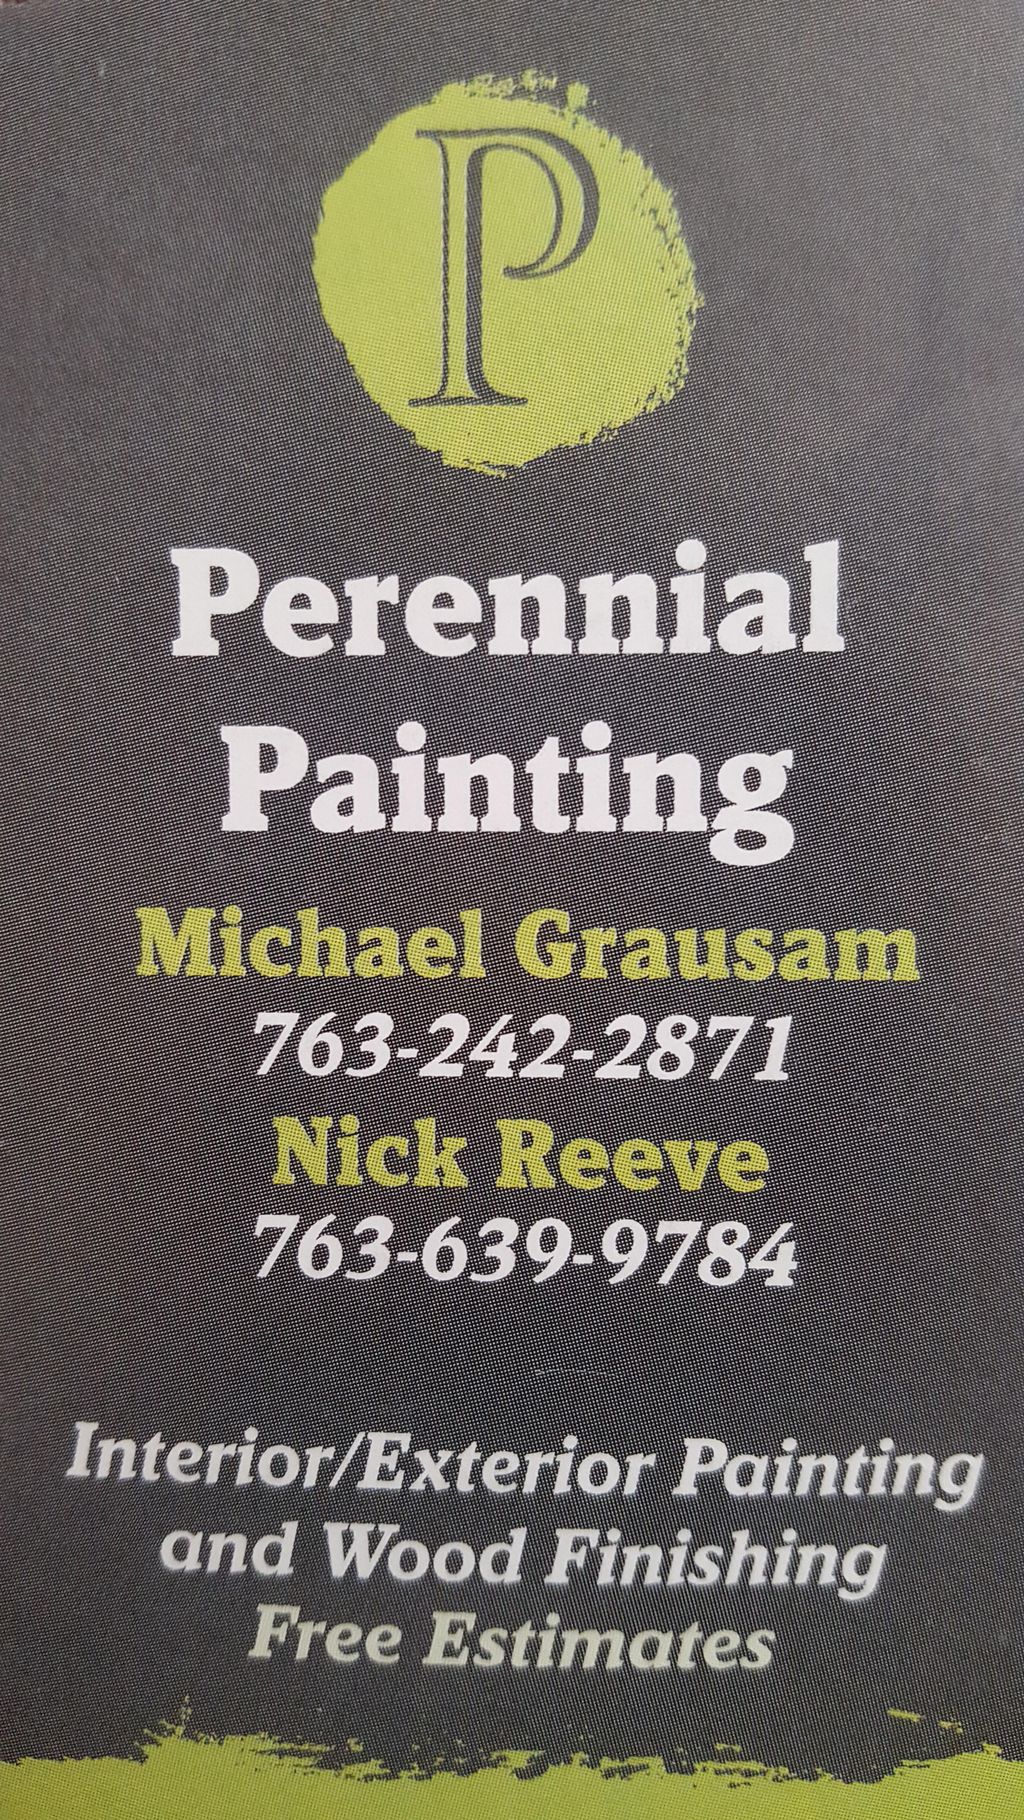 Perennial Painting LLC